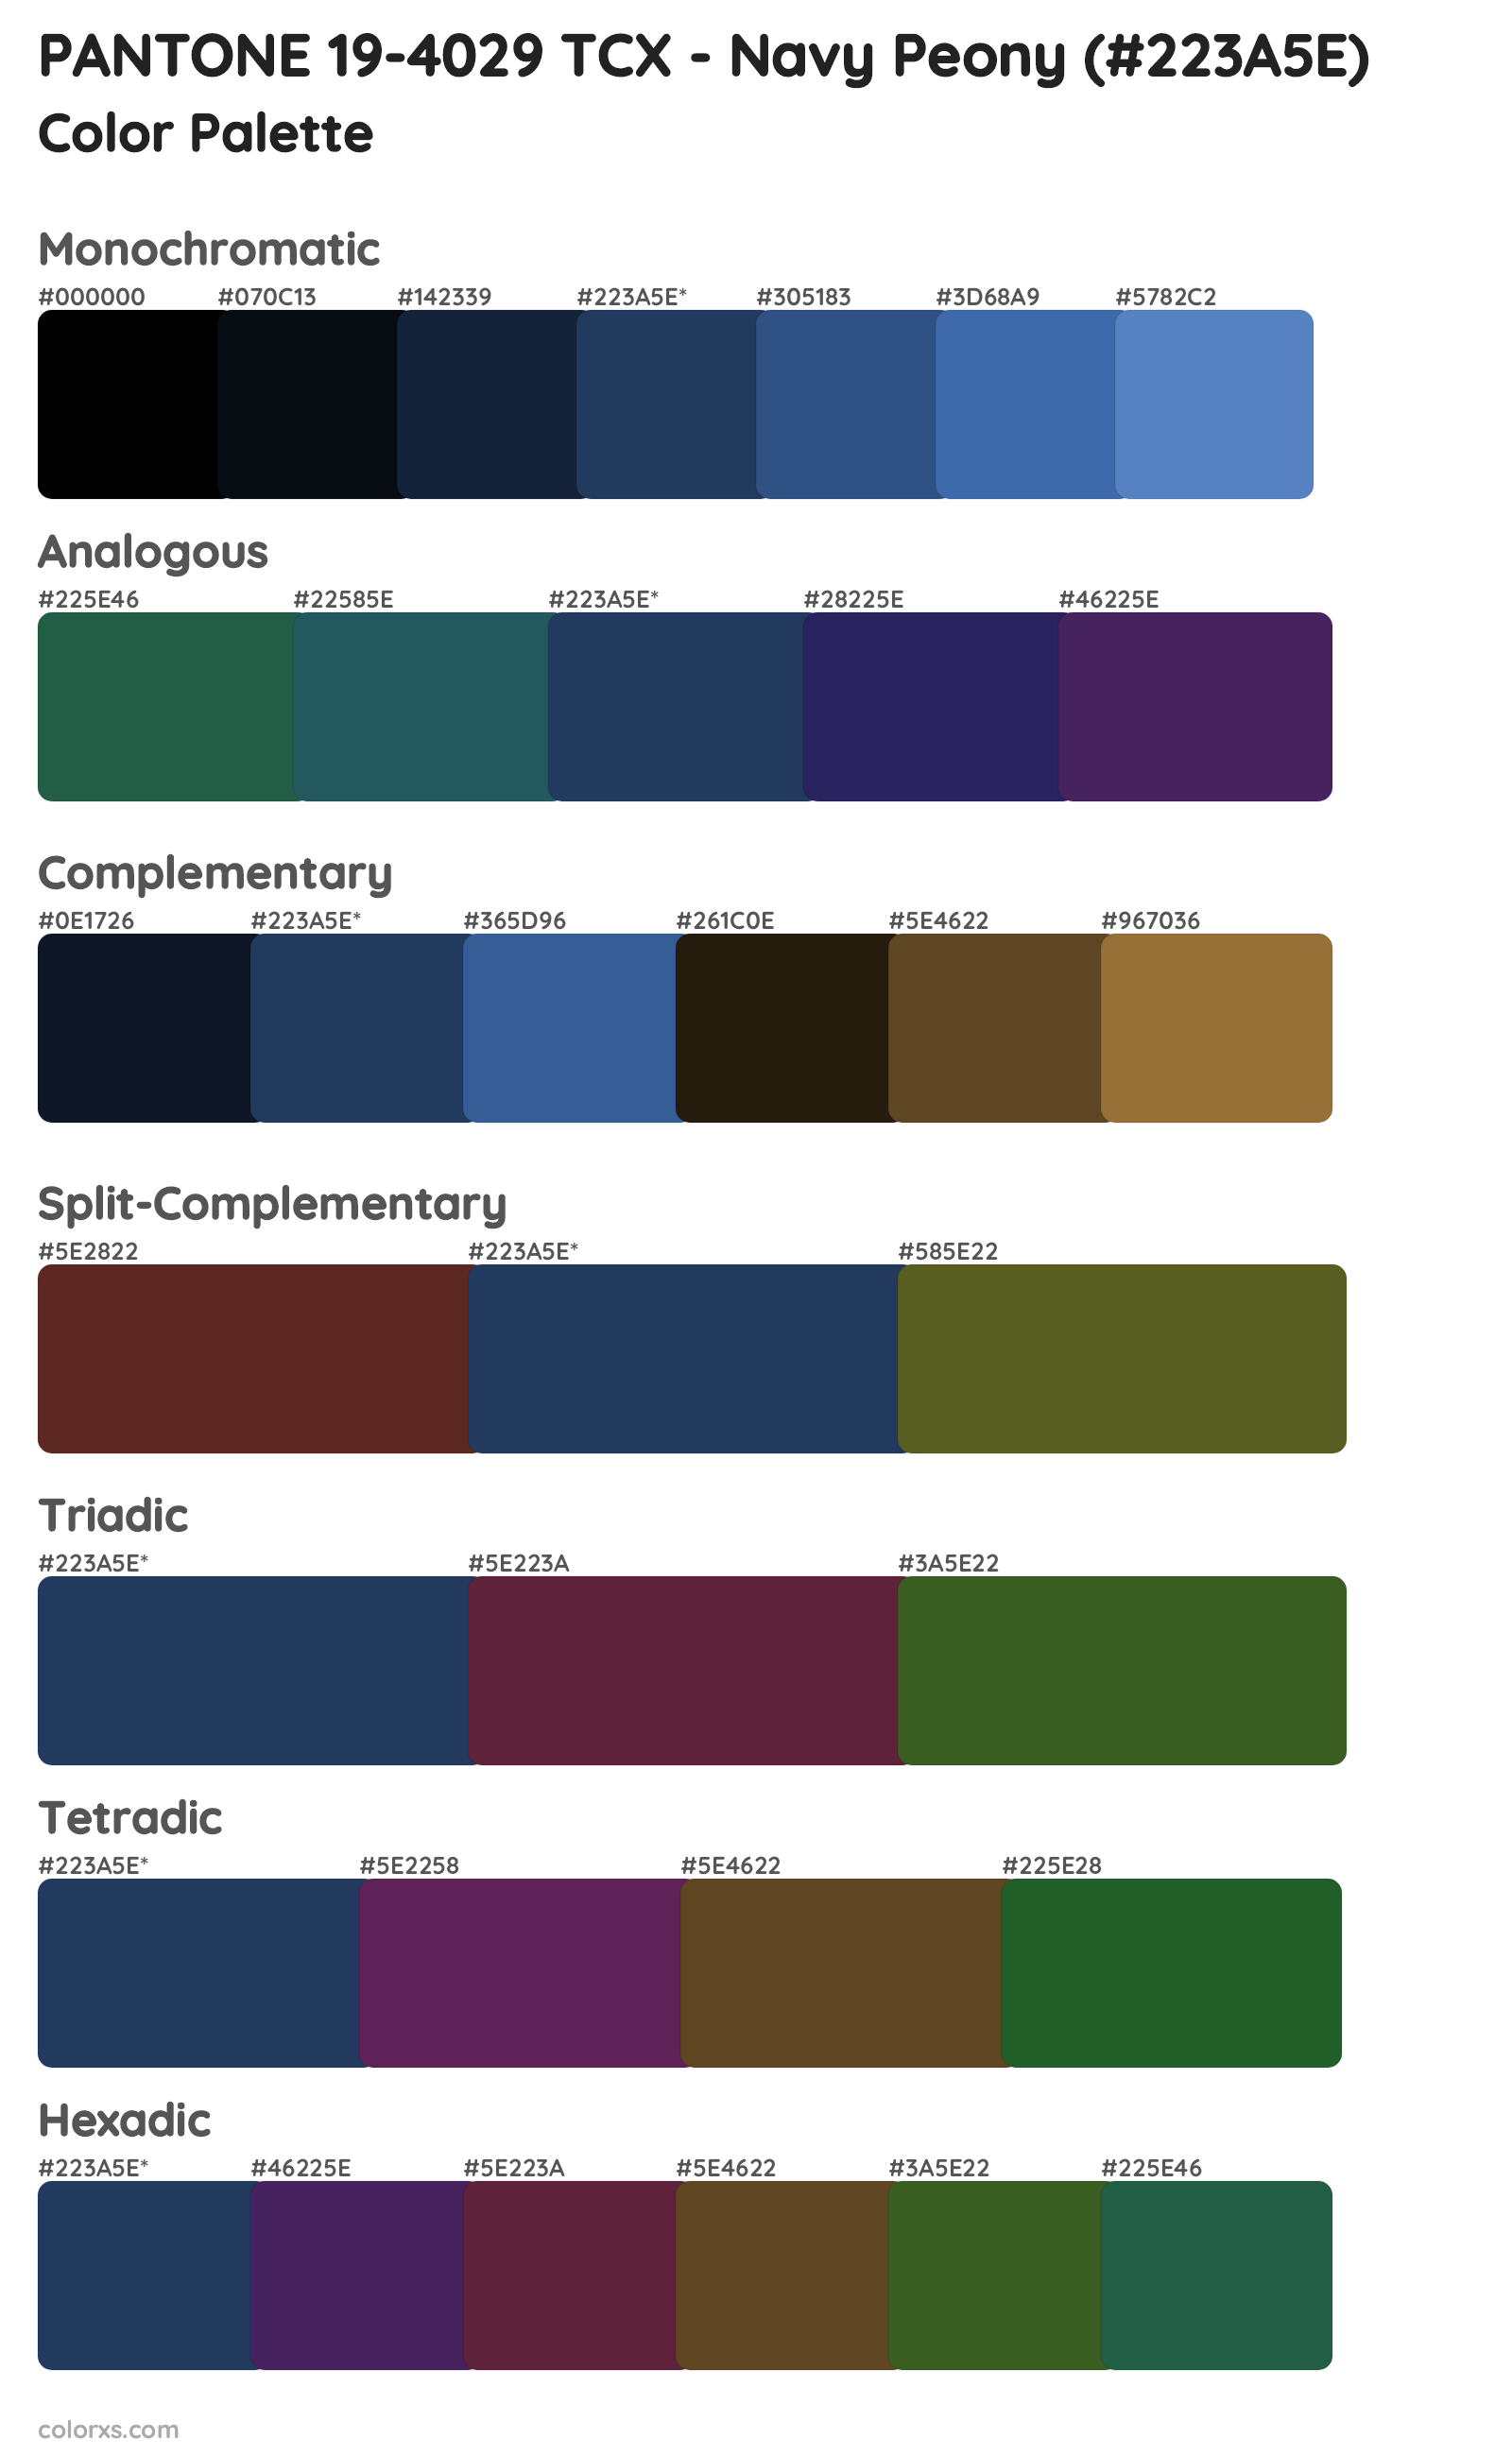 PANTONE 19-4029 TCX - Navy Peony Color Scheme Palettes